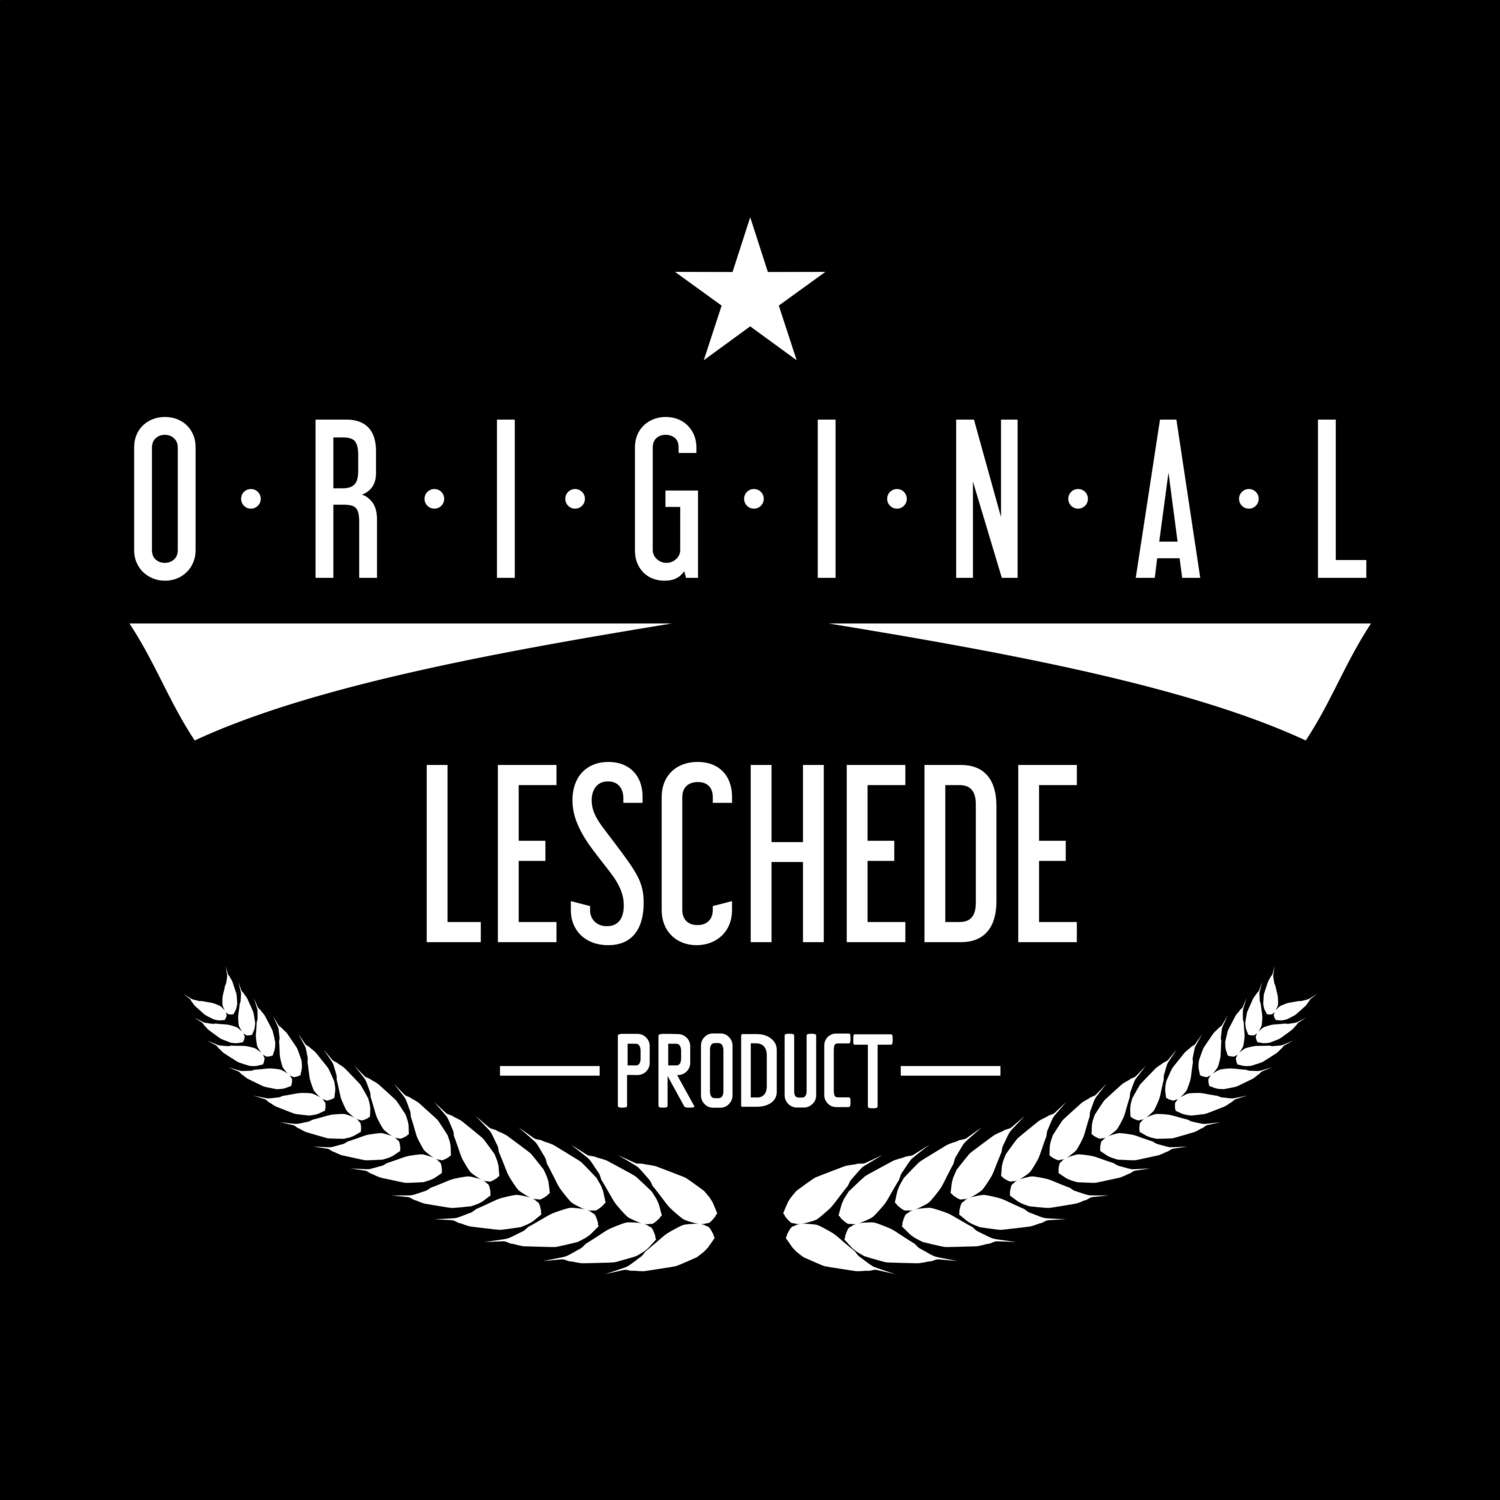 Leschede T-Shirt »Original Product«